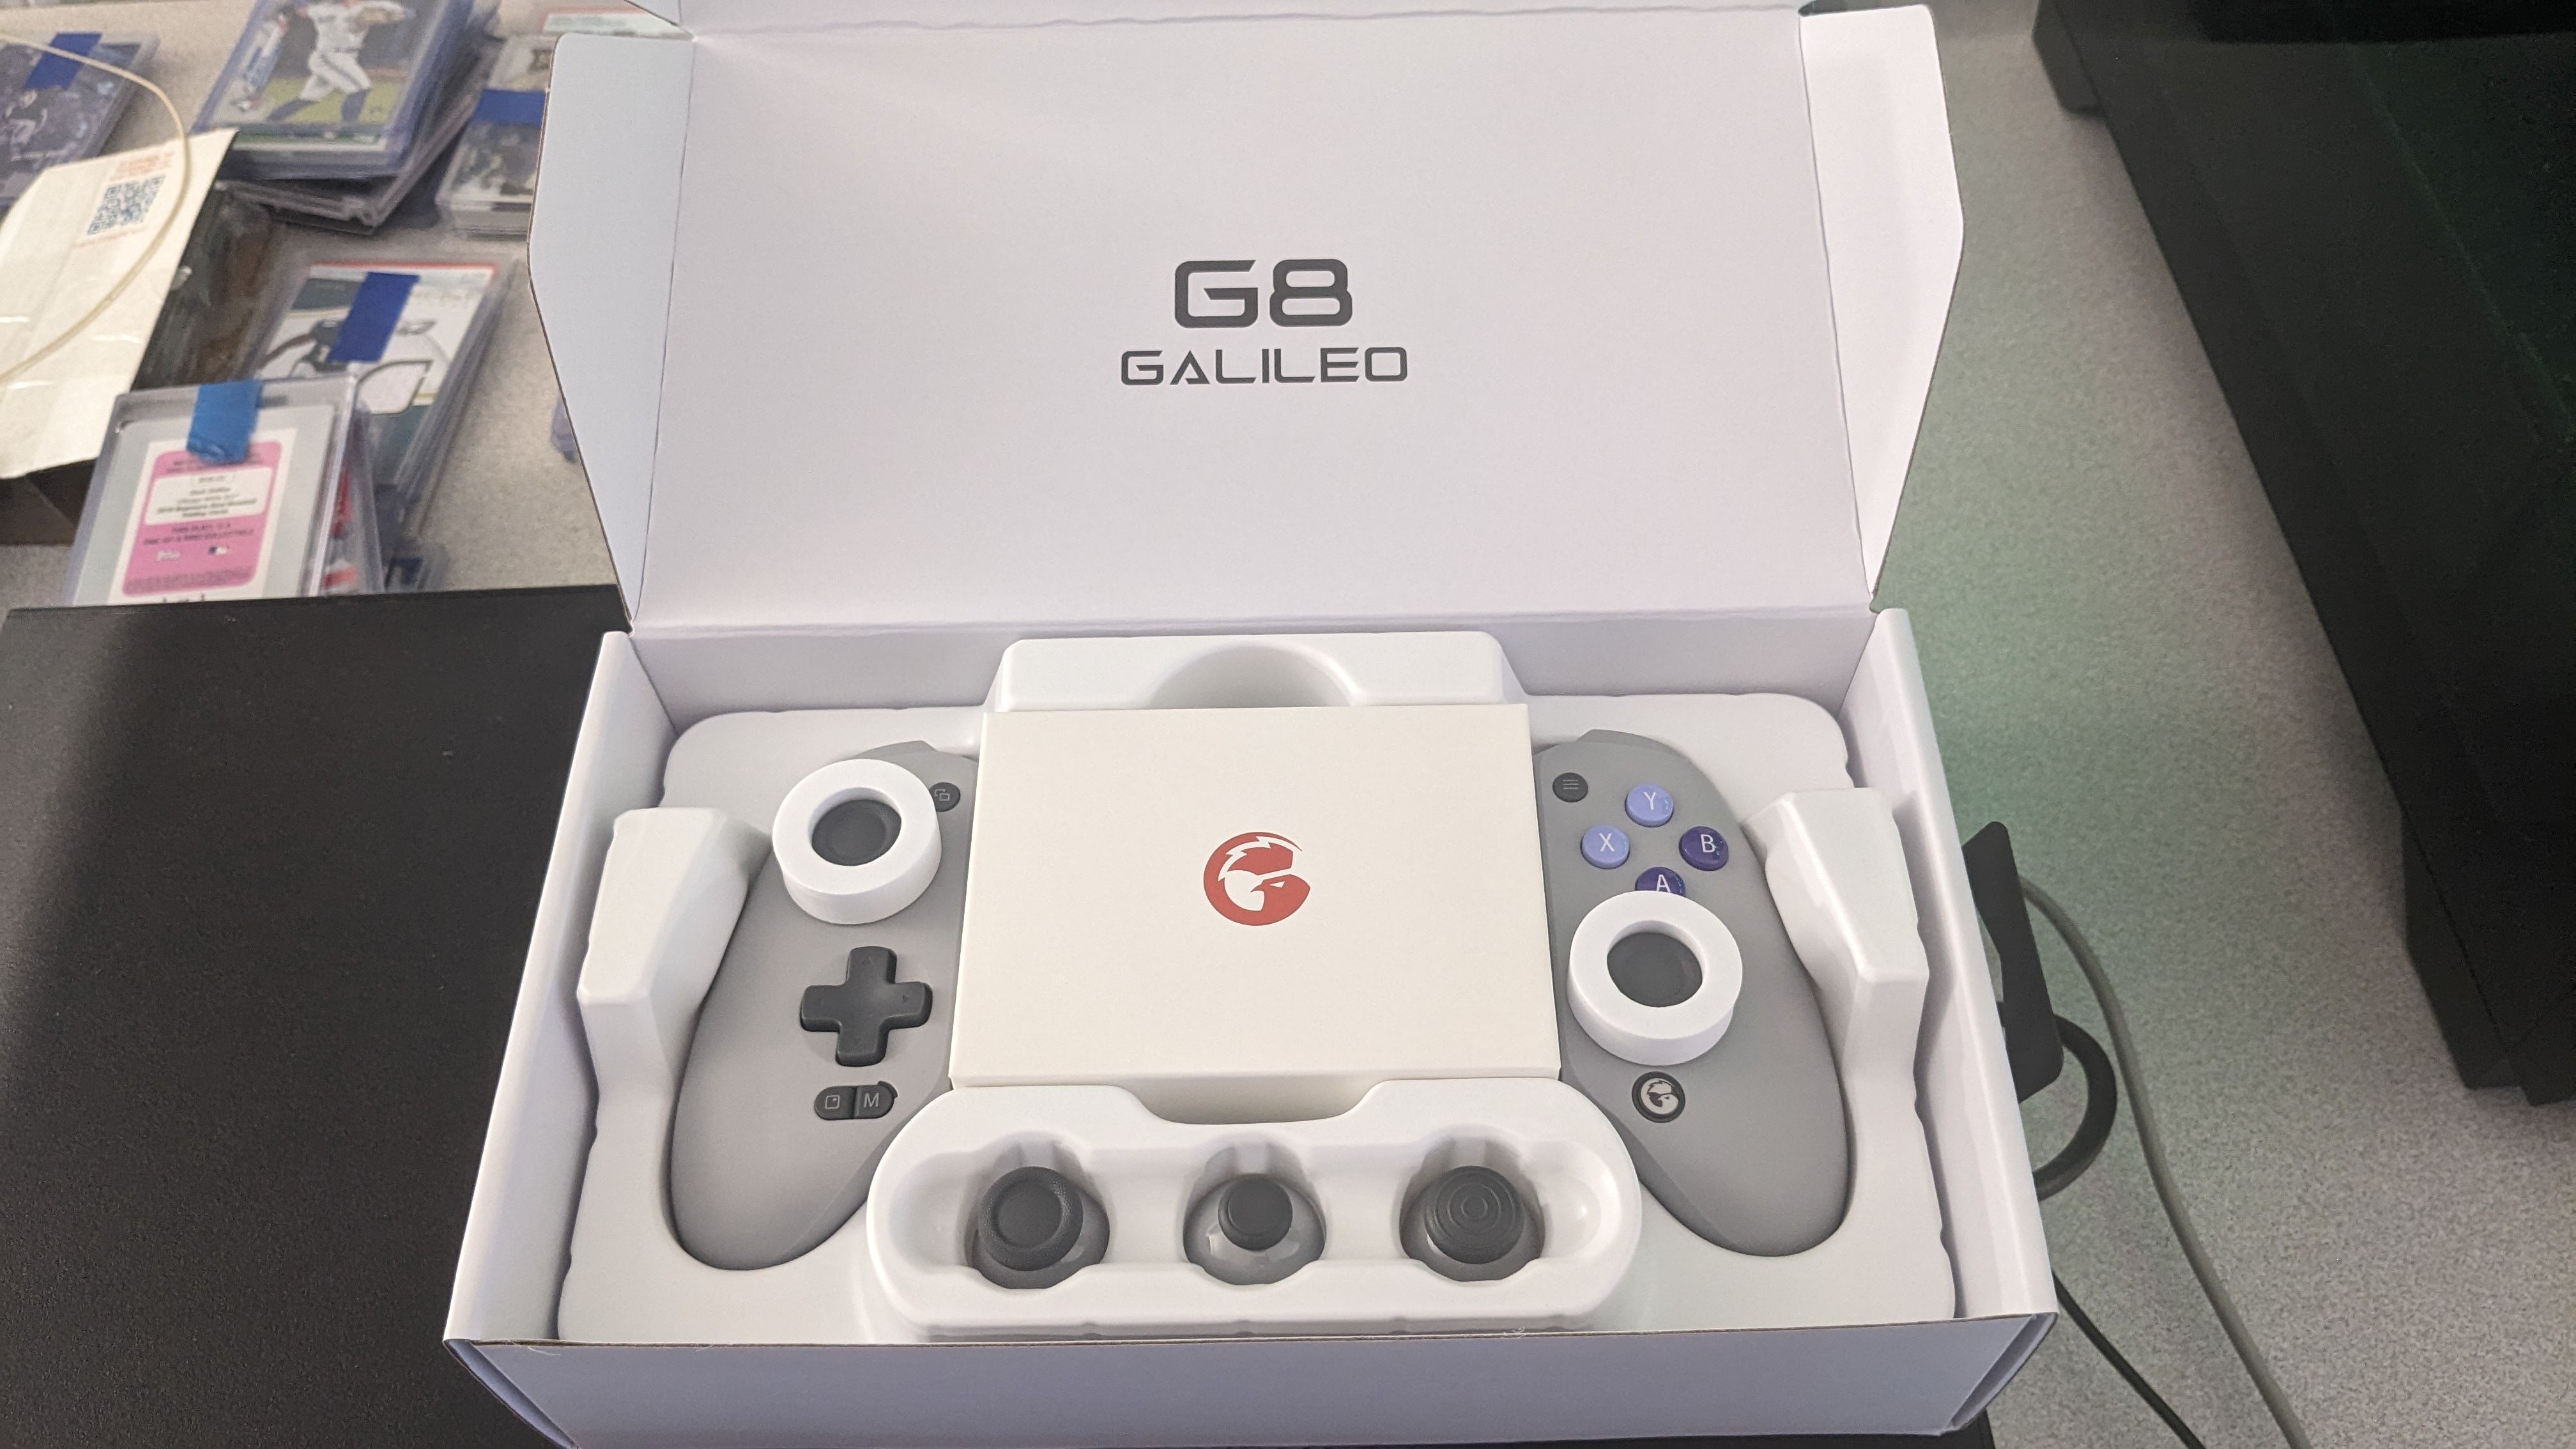 The GameSir G8 Galileo Box Contents #2